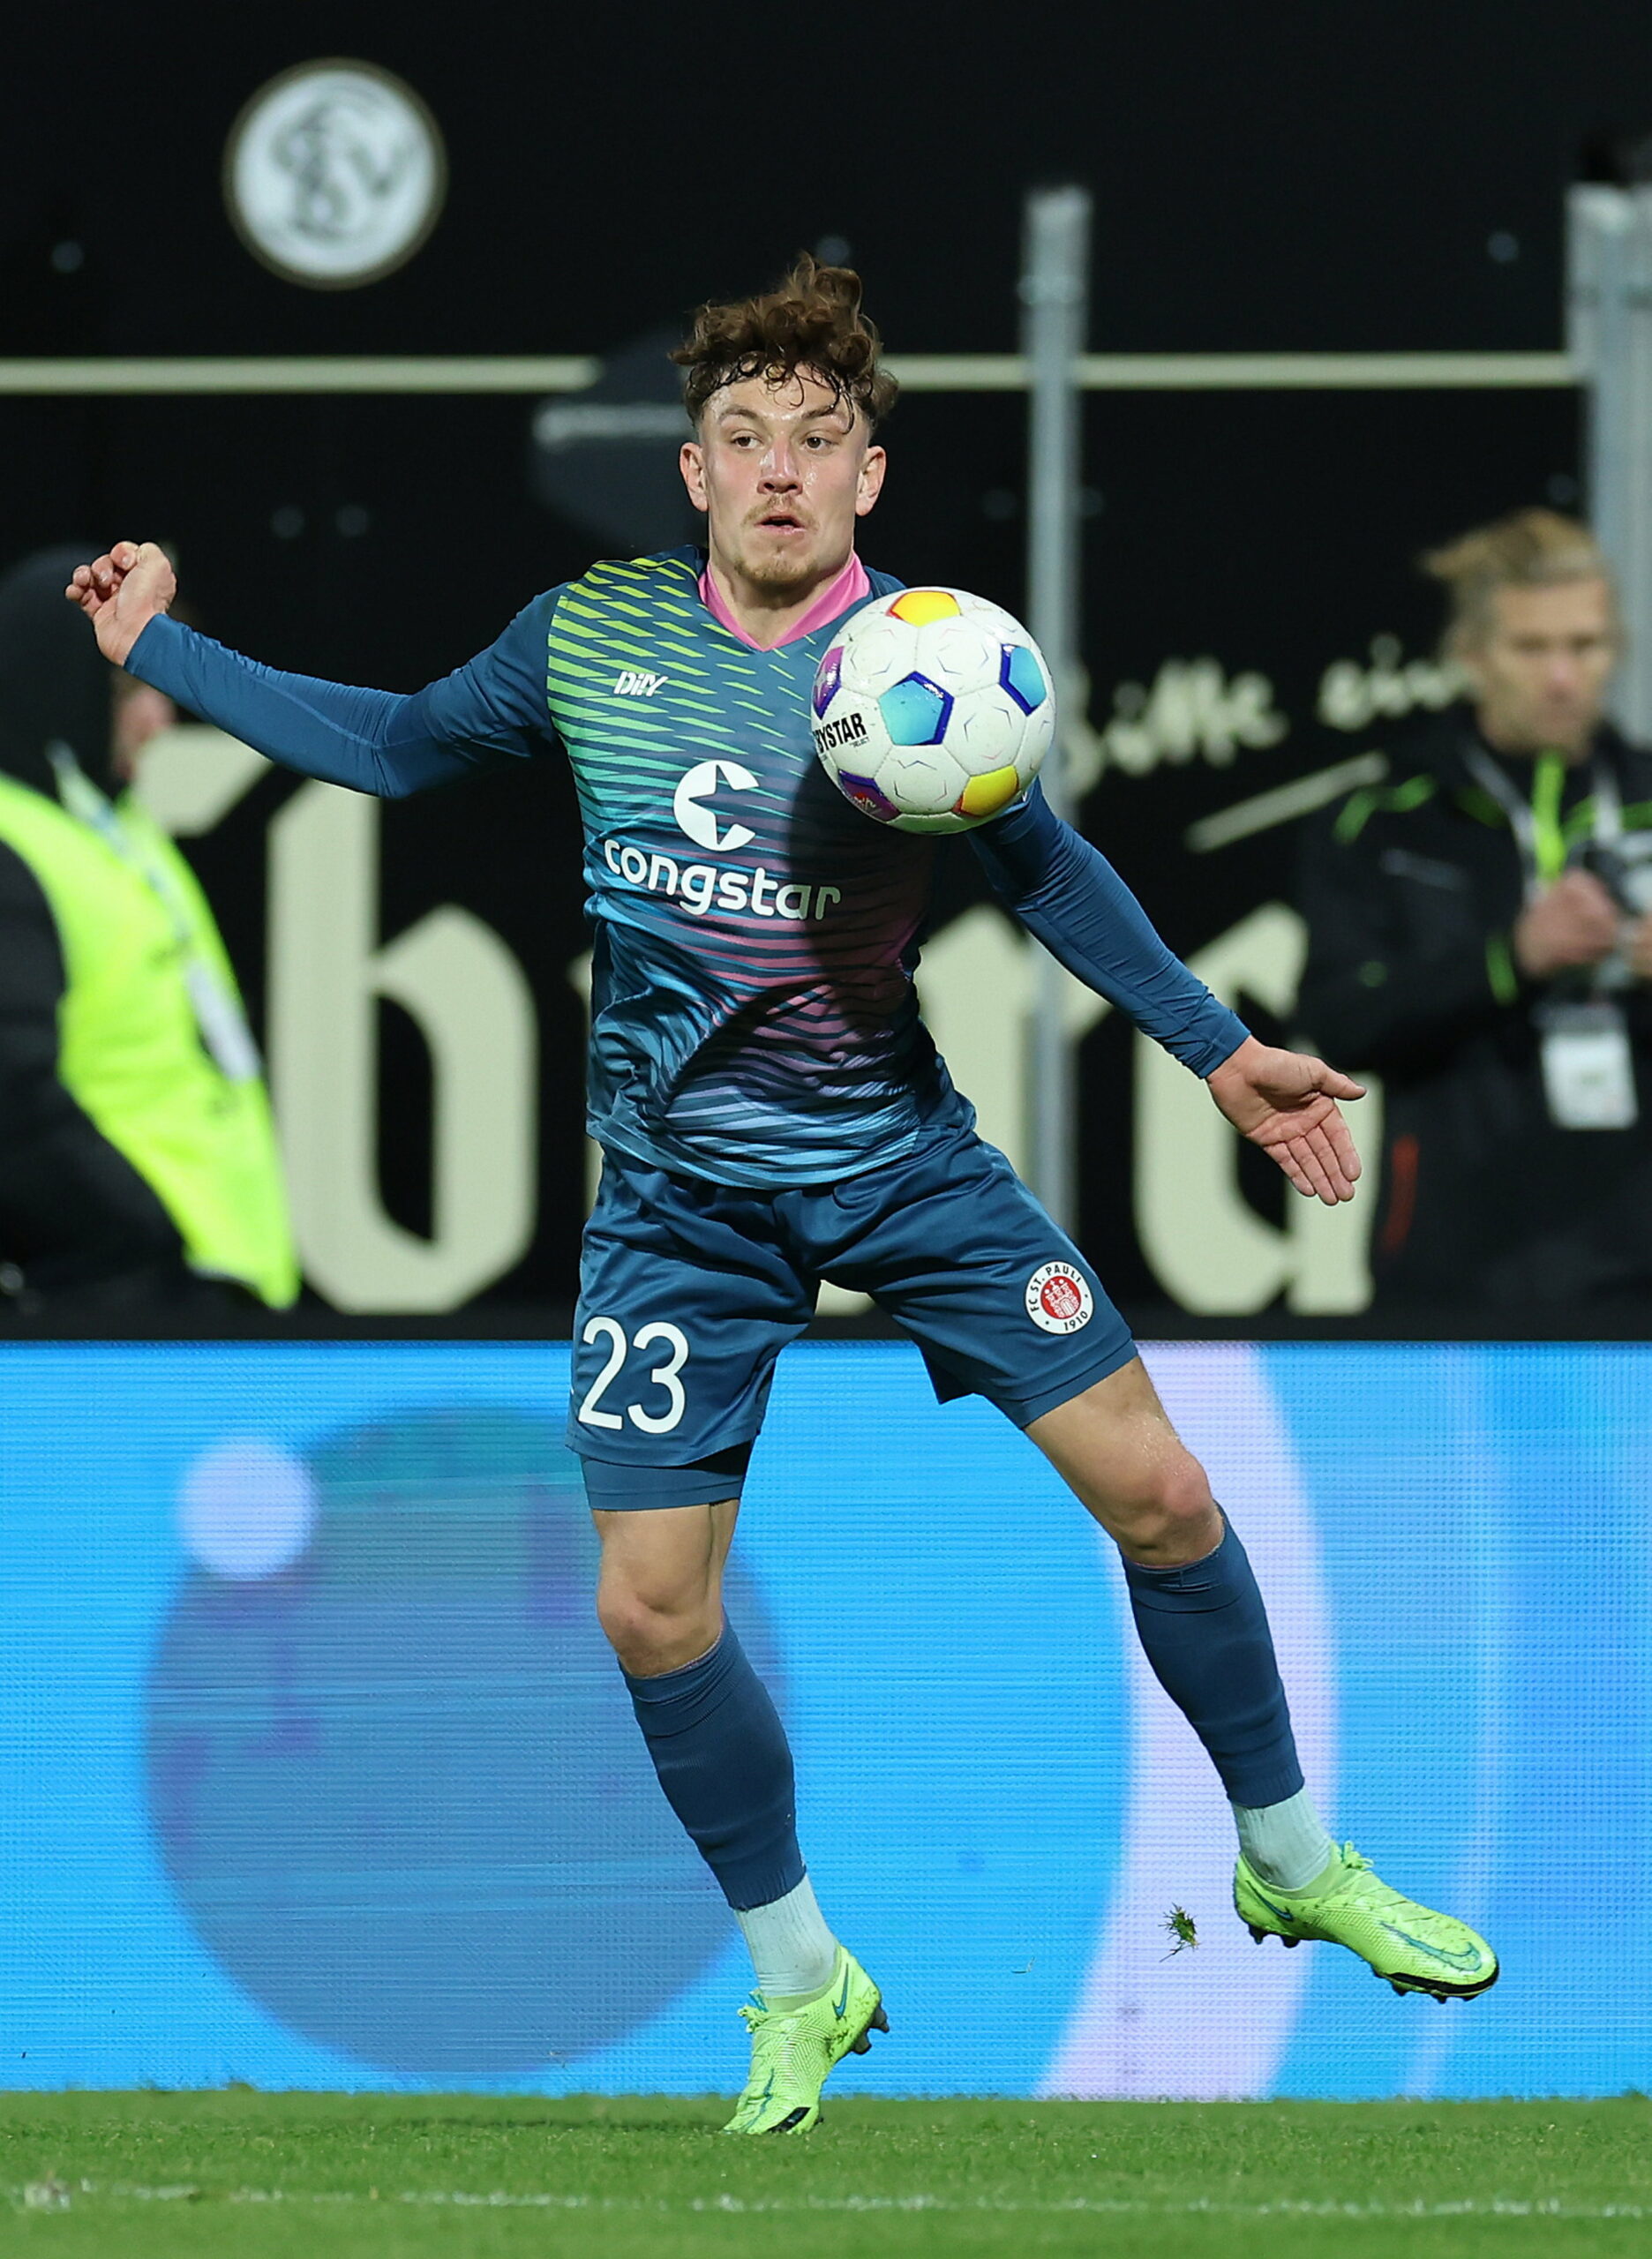 St. Pauli-Profi Treu nimmt Ball im Spiel gegen Elversberg an